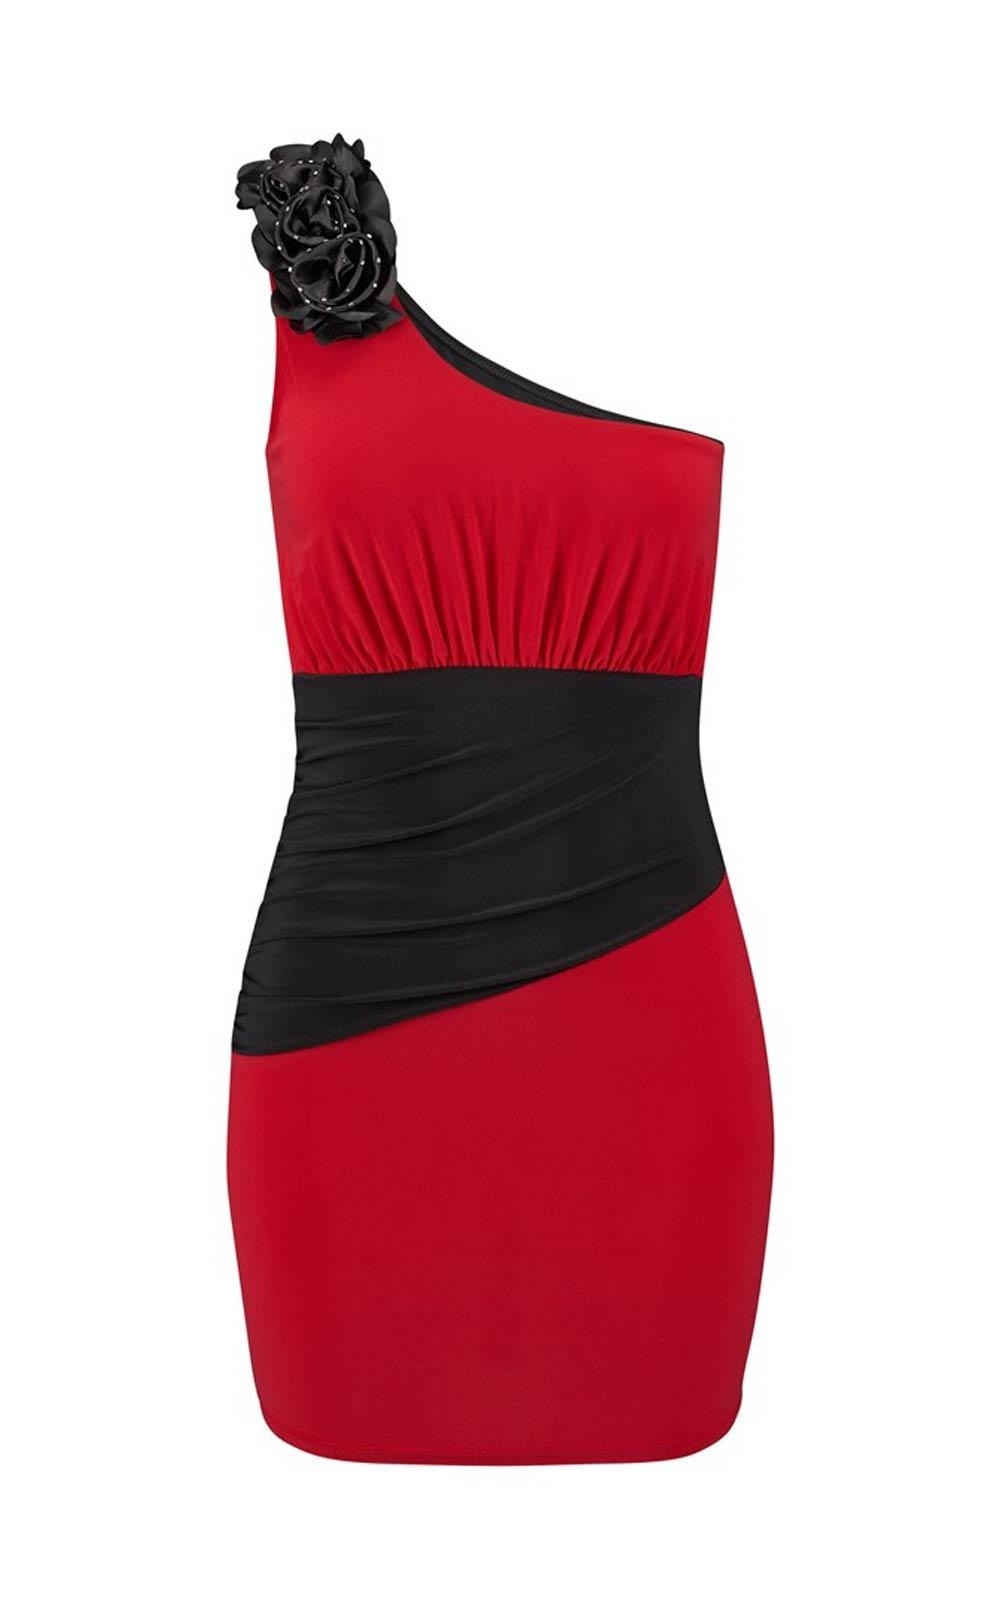 Grossartig Rot Schwarzes Kleid Stylish Abendkleid